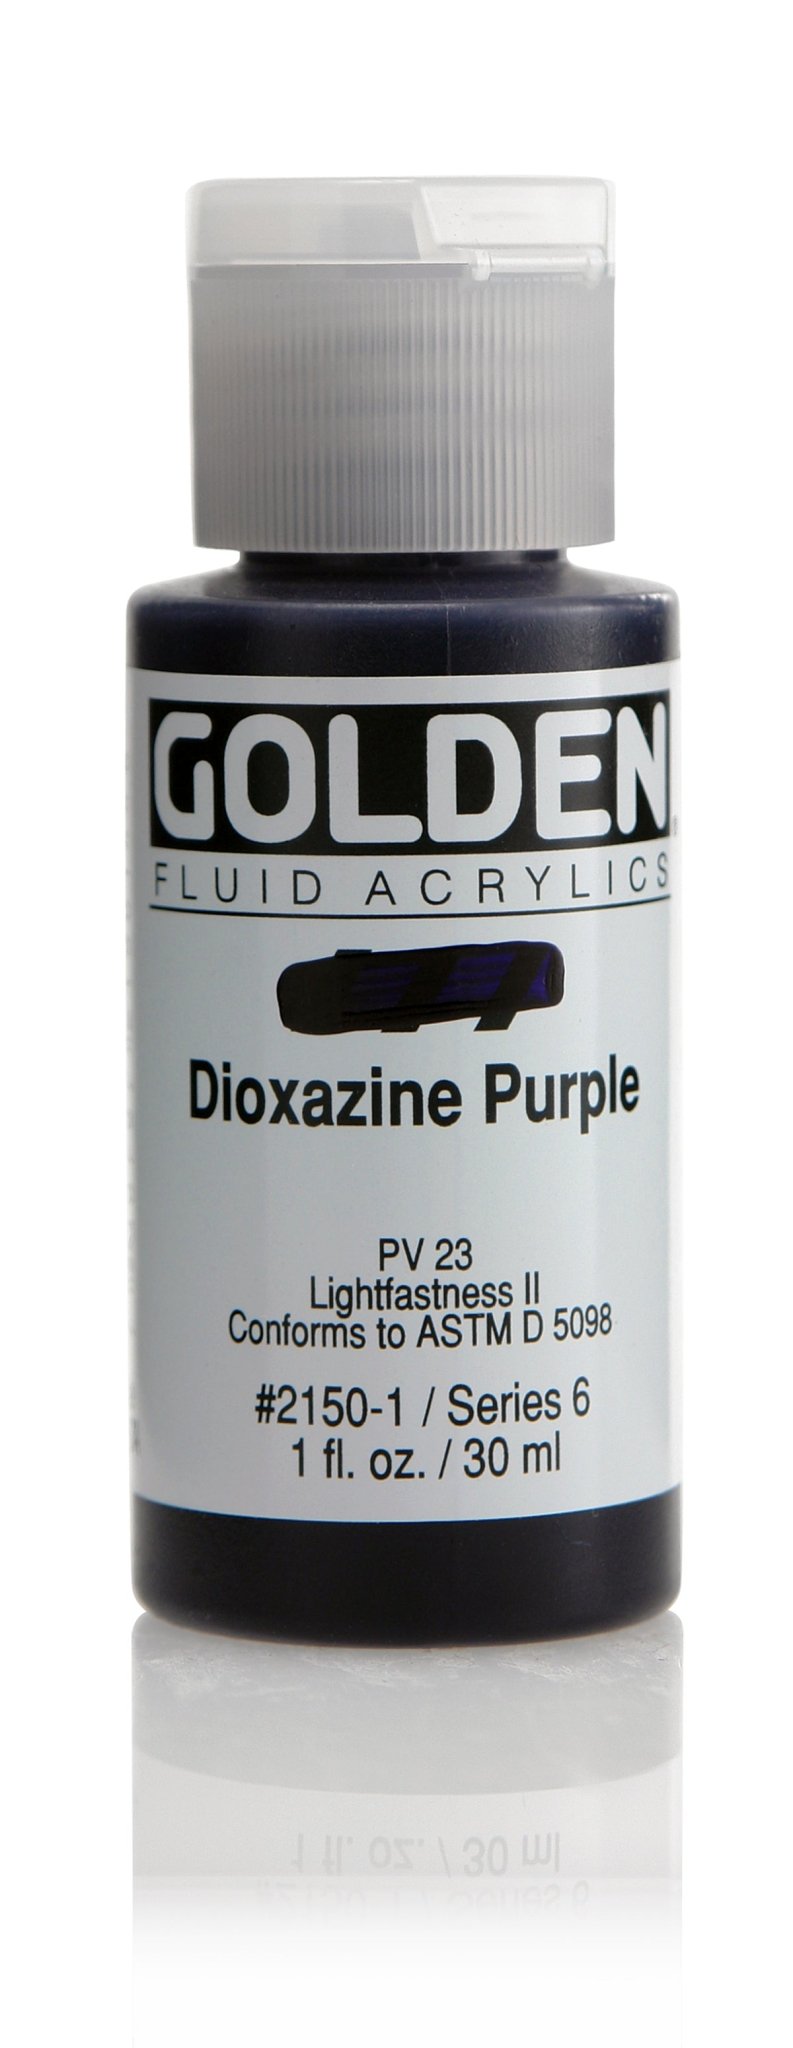 Golden Fluid Acrylic 30ml Dioxazine Purple - theartshop.com.au